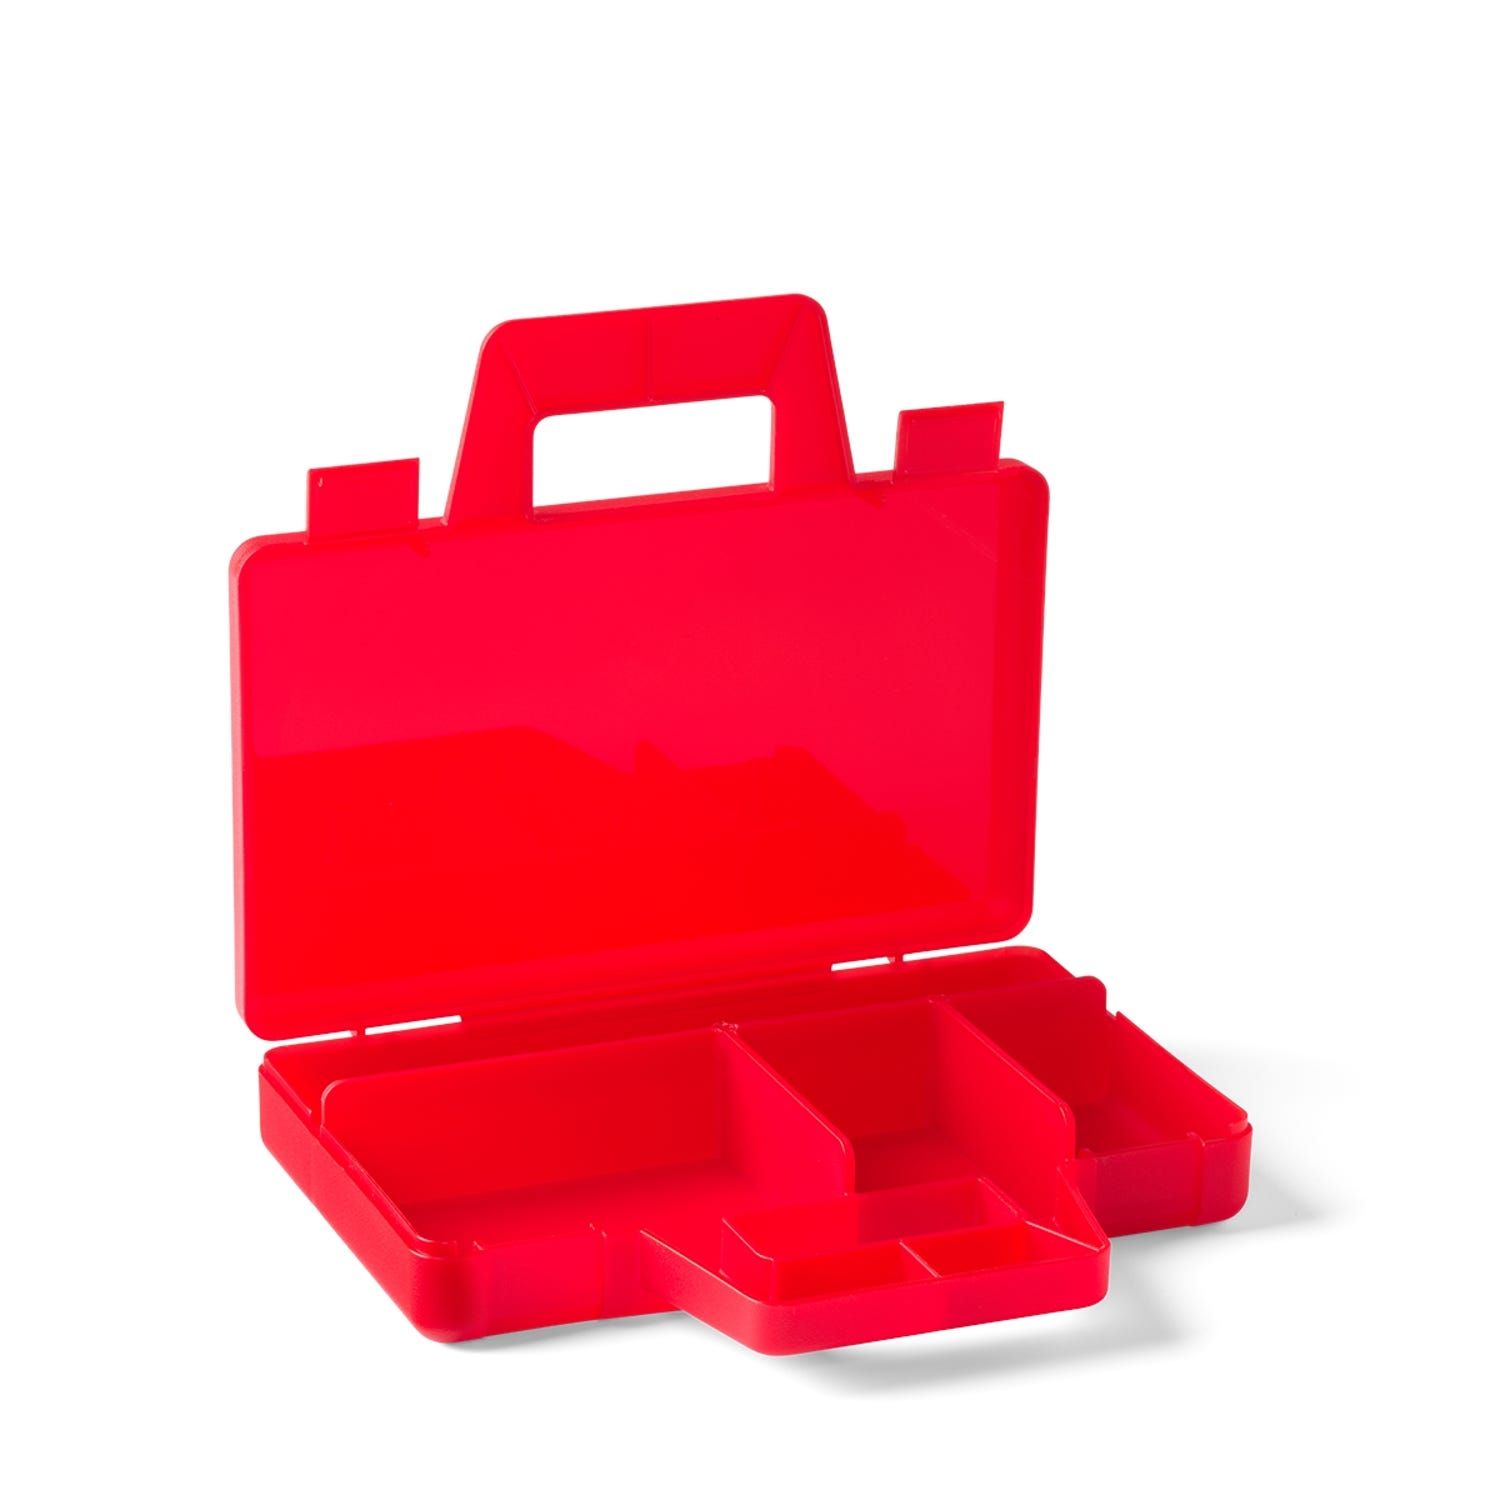 LEGO Red Storage Bins